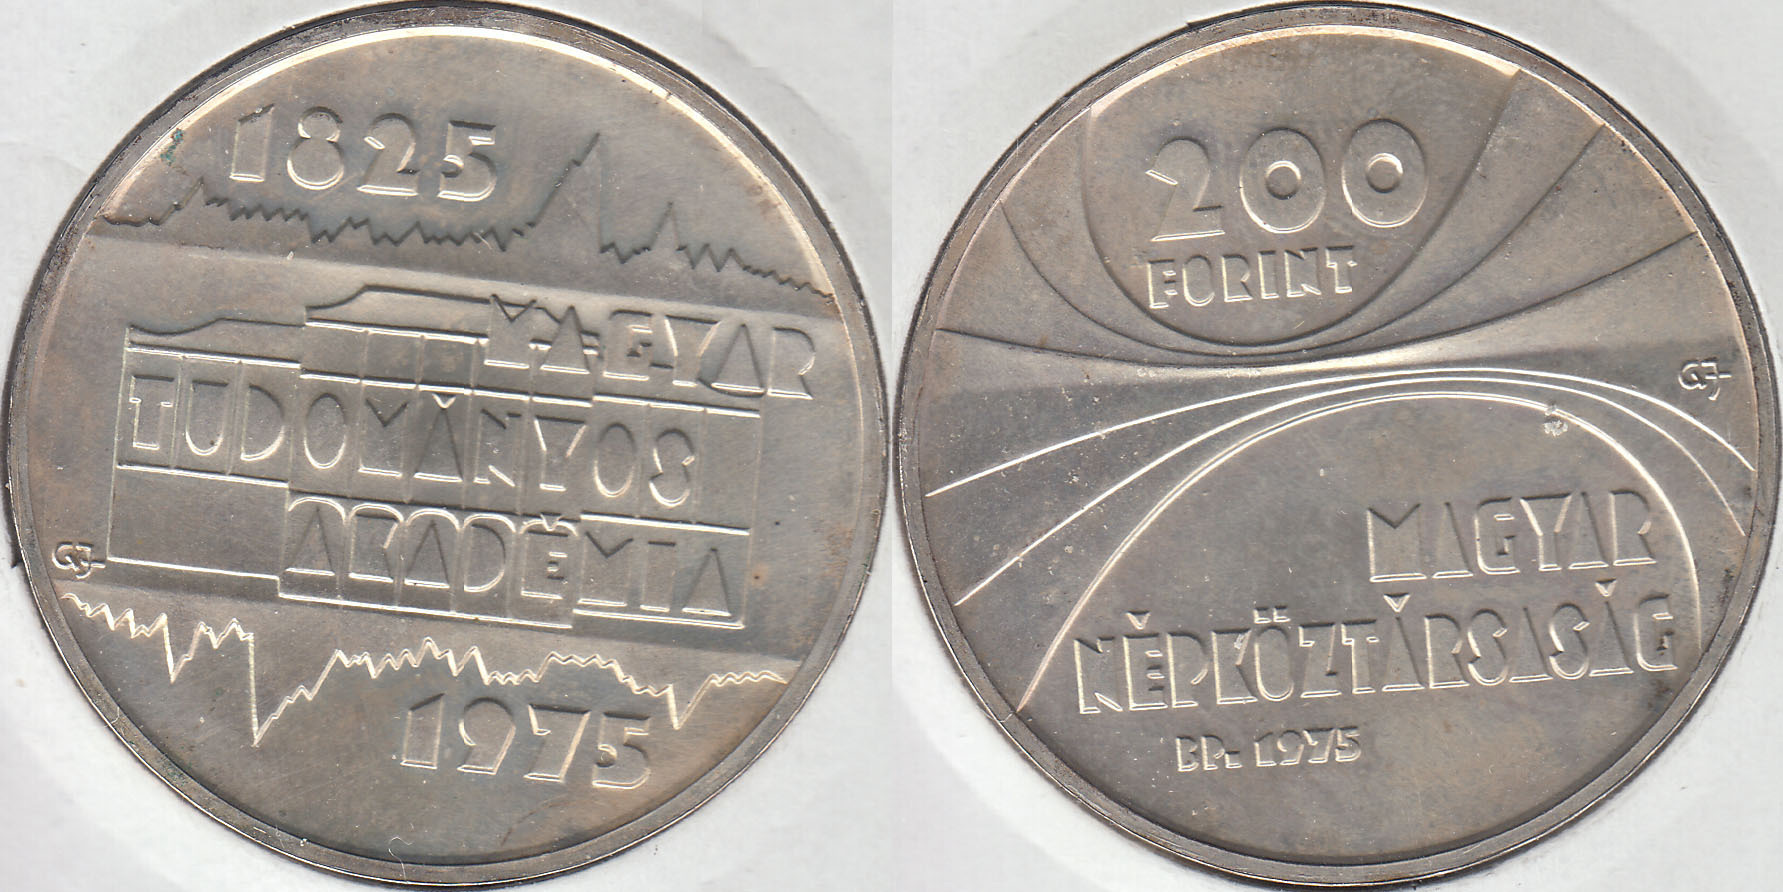 HUNGRIA - HUNGARY. 200 FORINT DE 1975 BP. PLATA 0.640. (2)